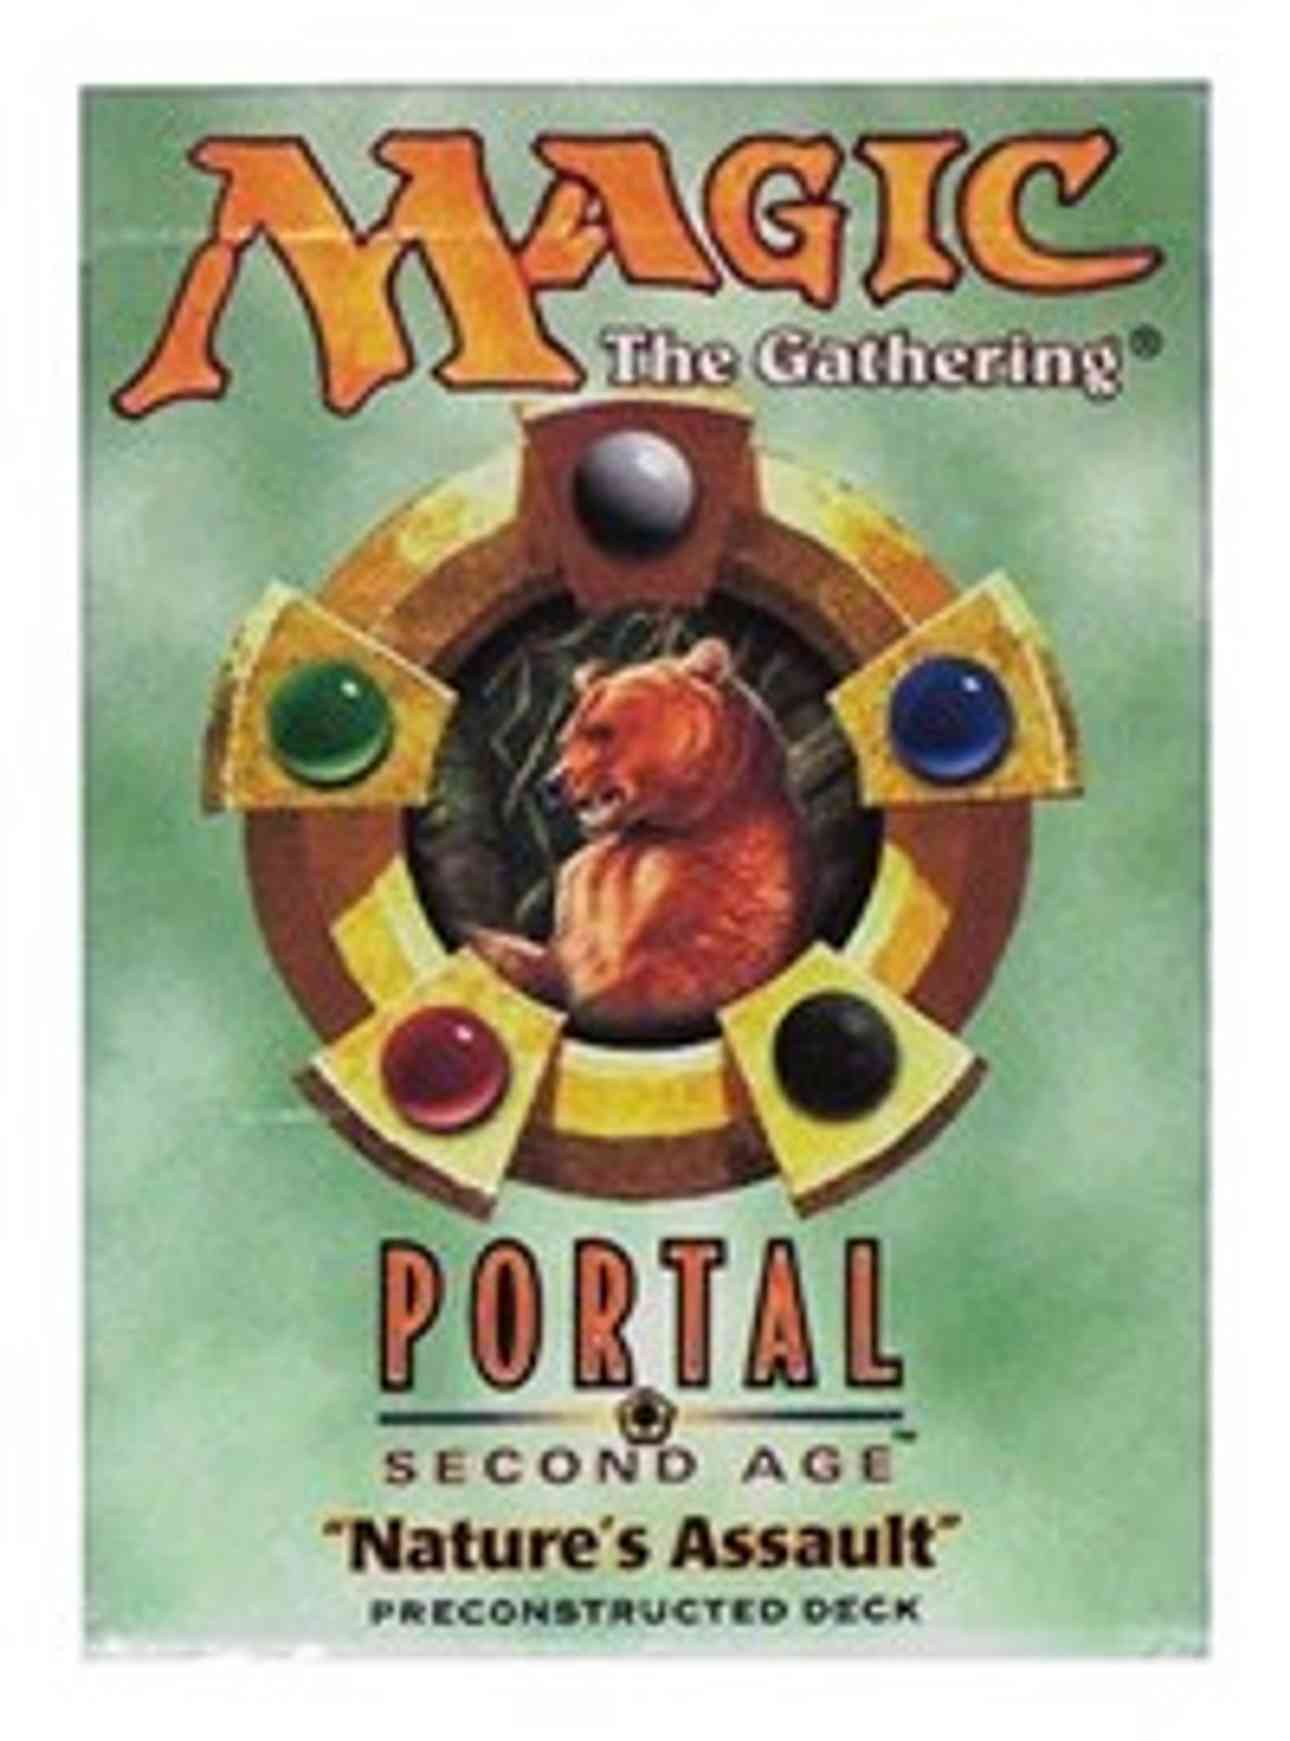 Portal Second Age Theme Deck - Nature's Assault magic card front